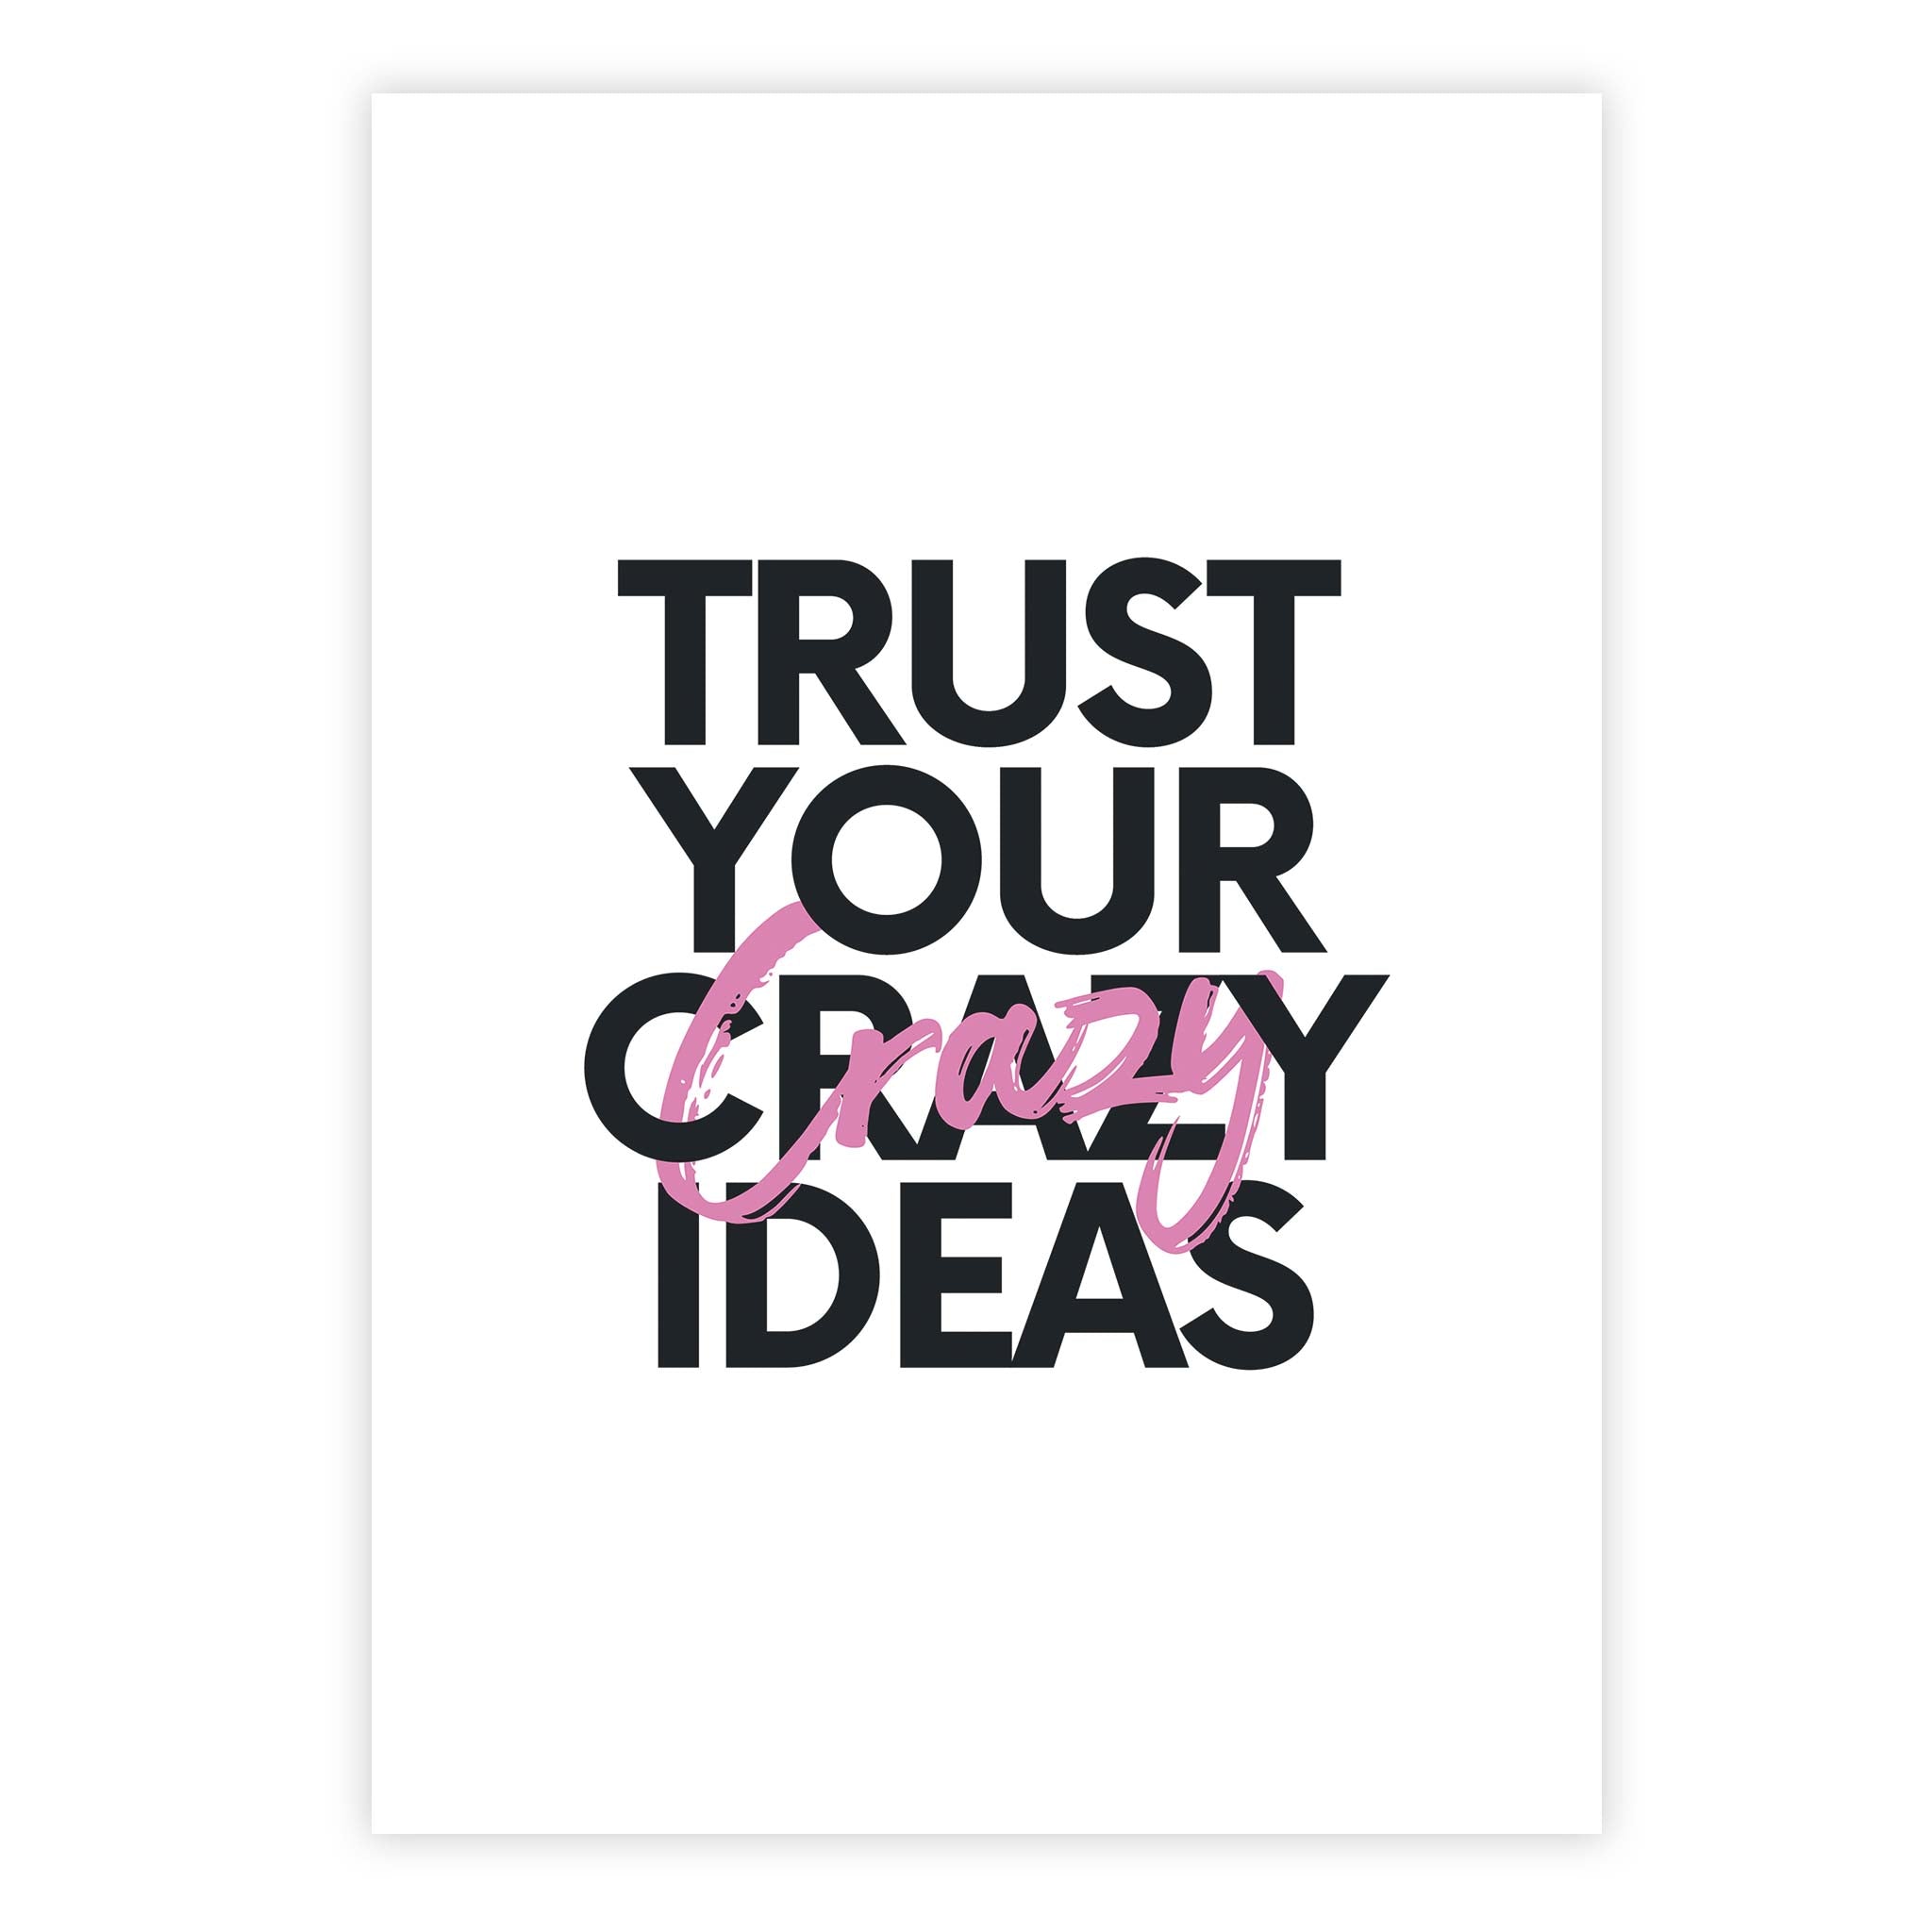 Trust your crazy ideas